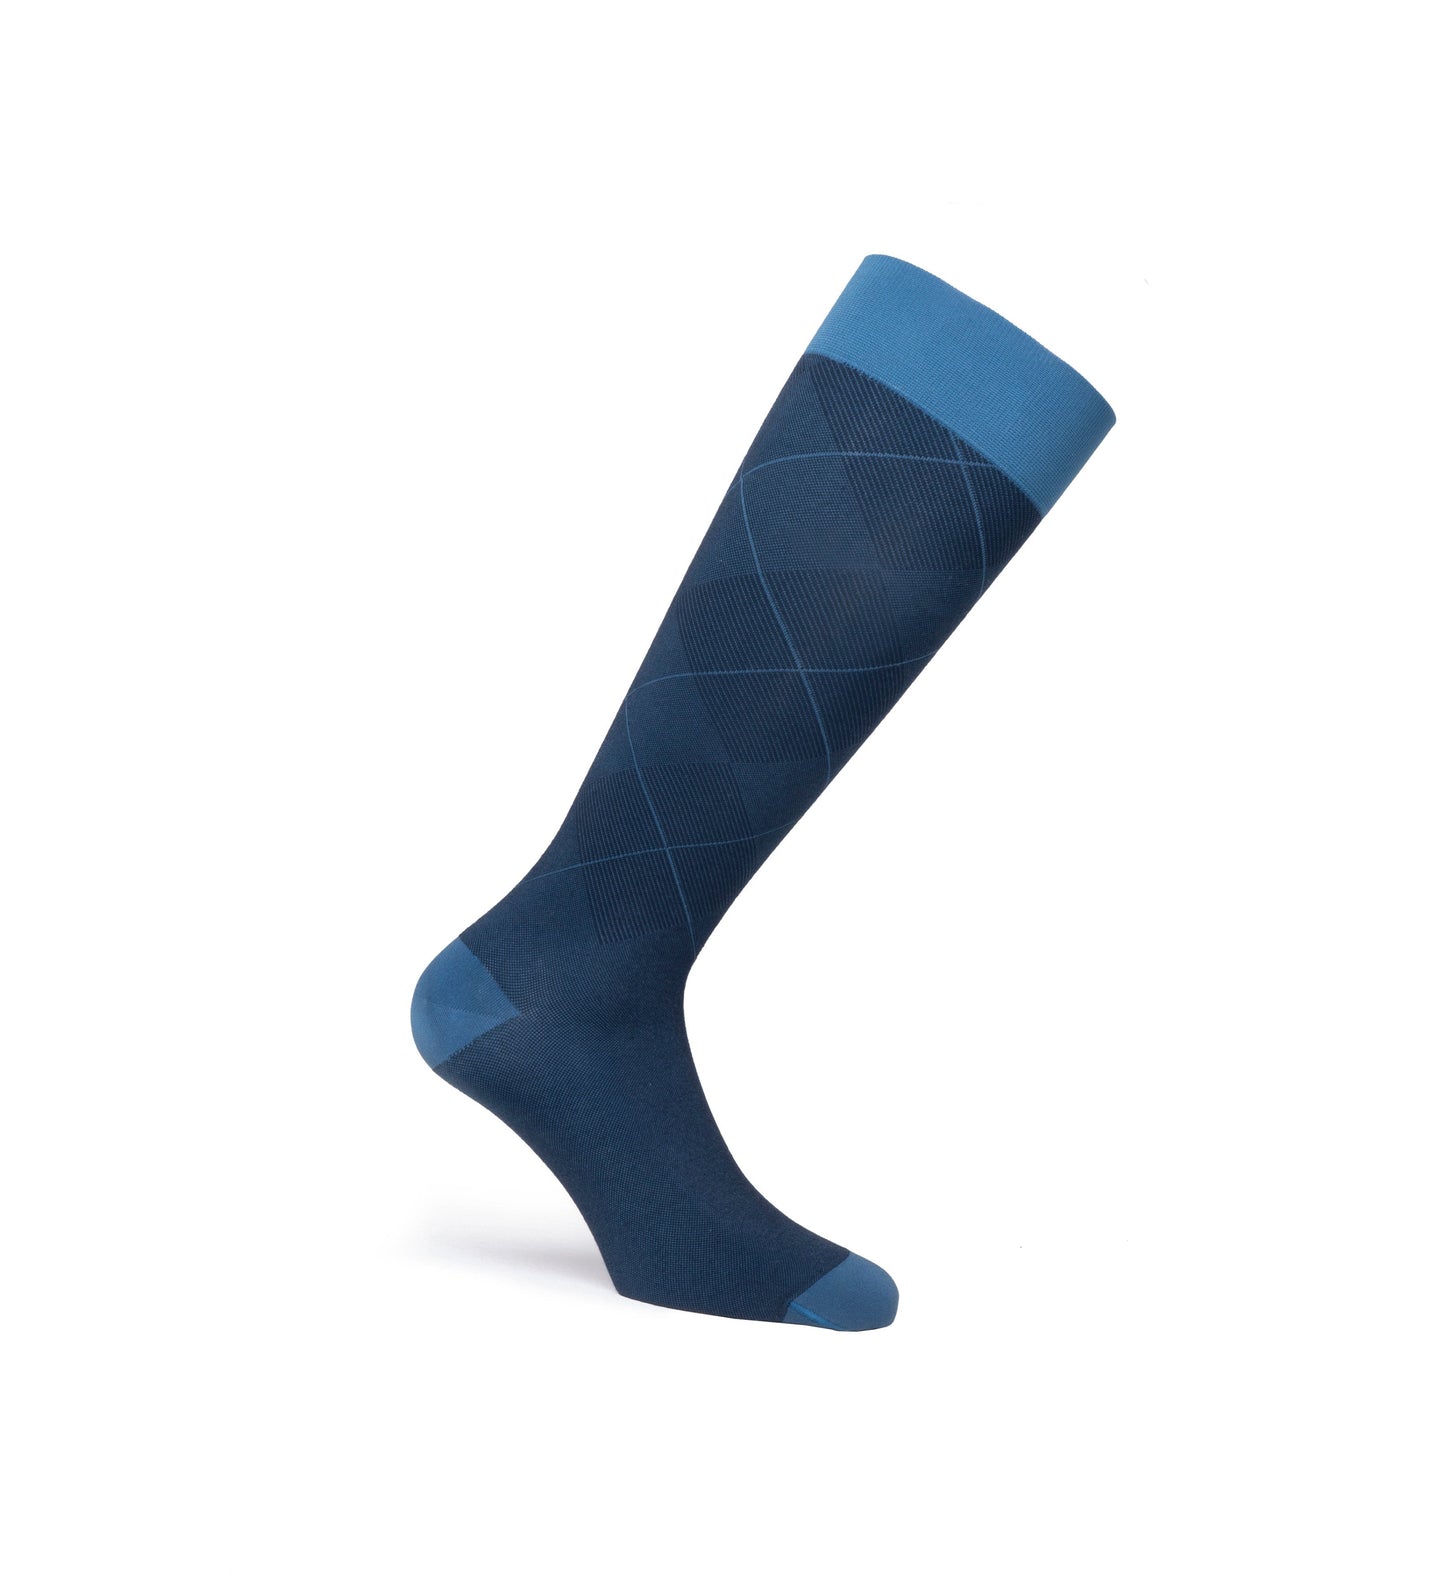 JOBST Casual Pattern Compression Socks 20-30 mmHg, Knee High, Closed Toe, Full Calf